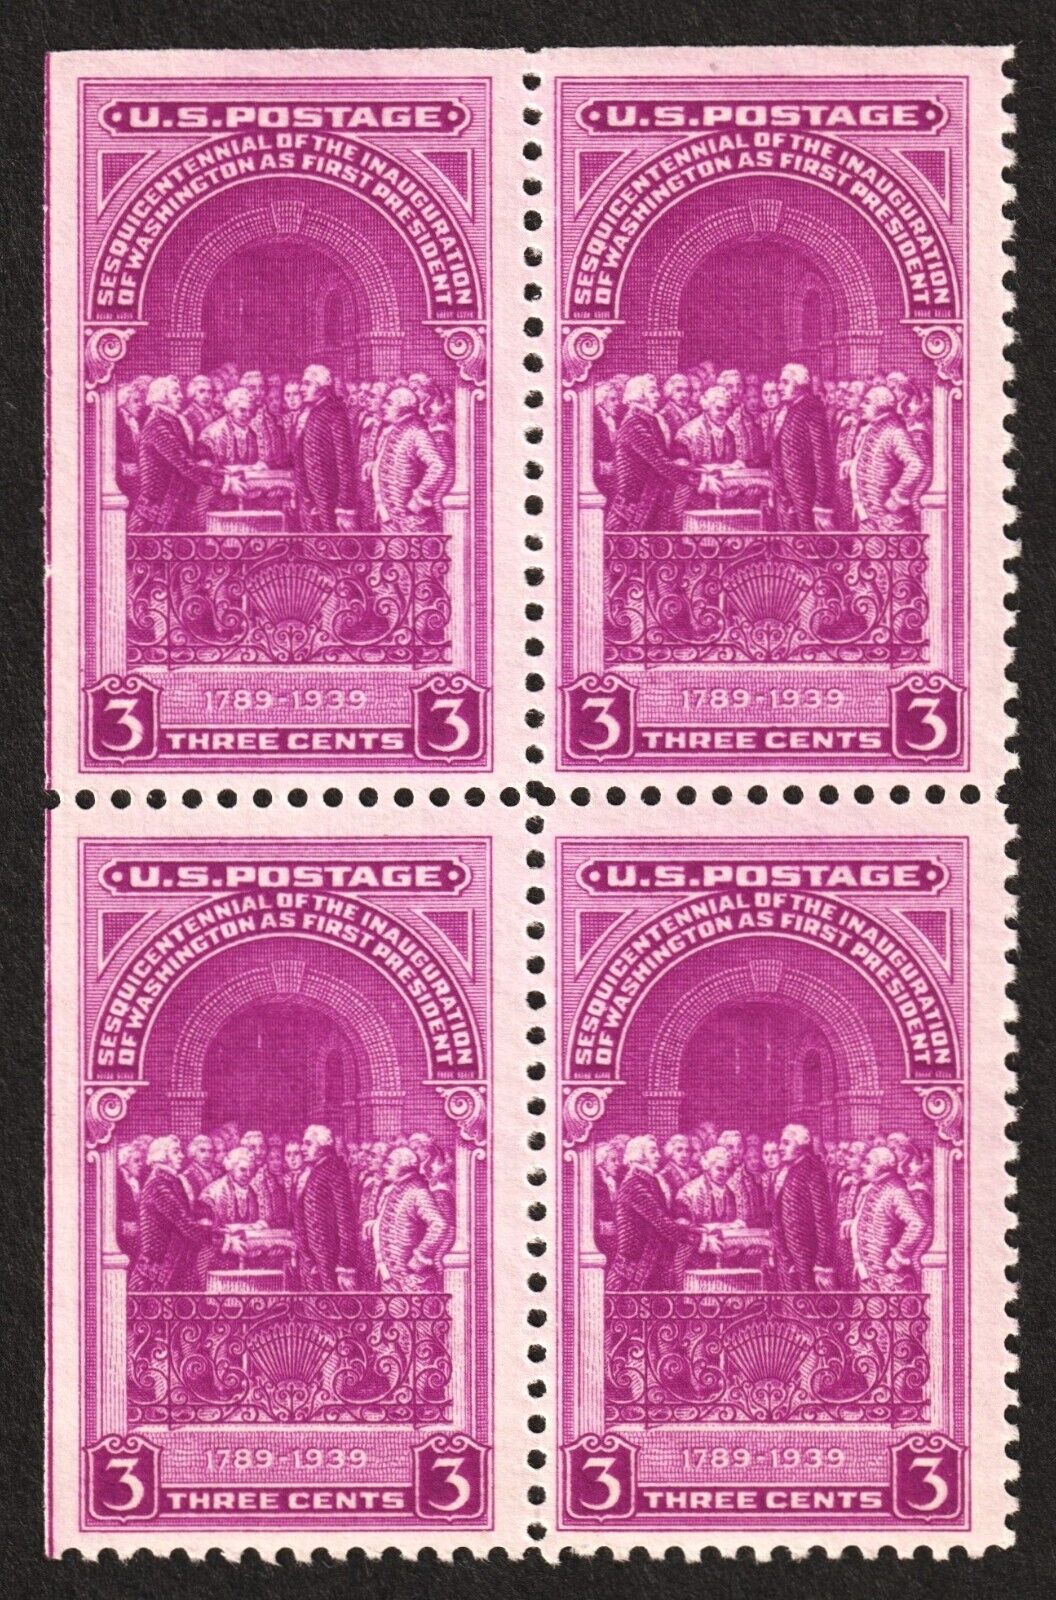 1939 George Washington inauguration sesquicentennial US Stamp Block of 4 MINT